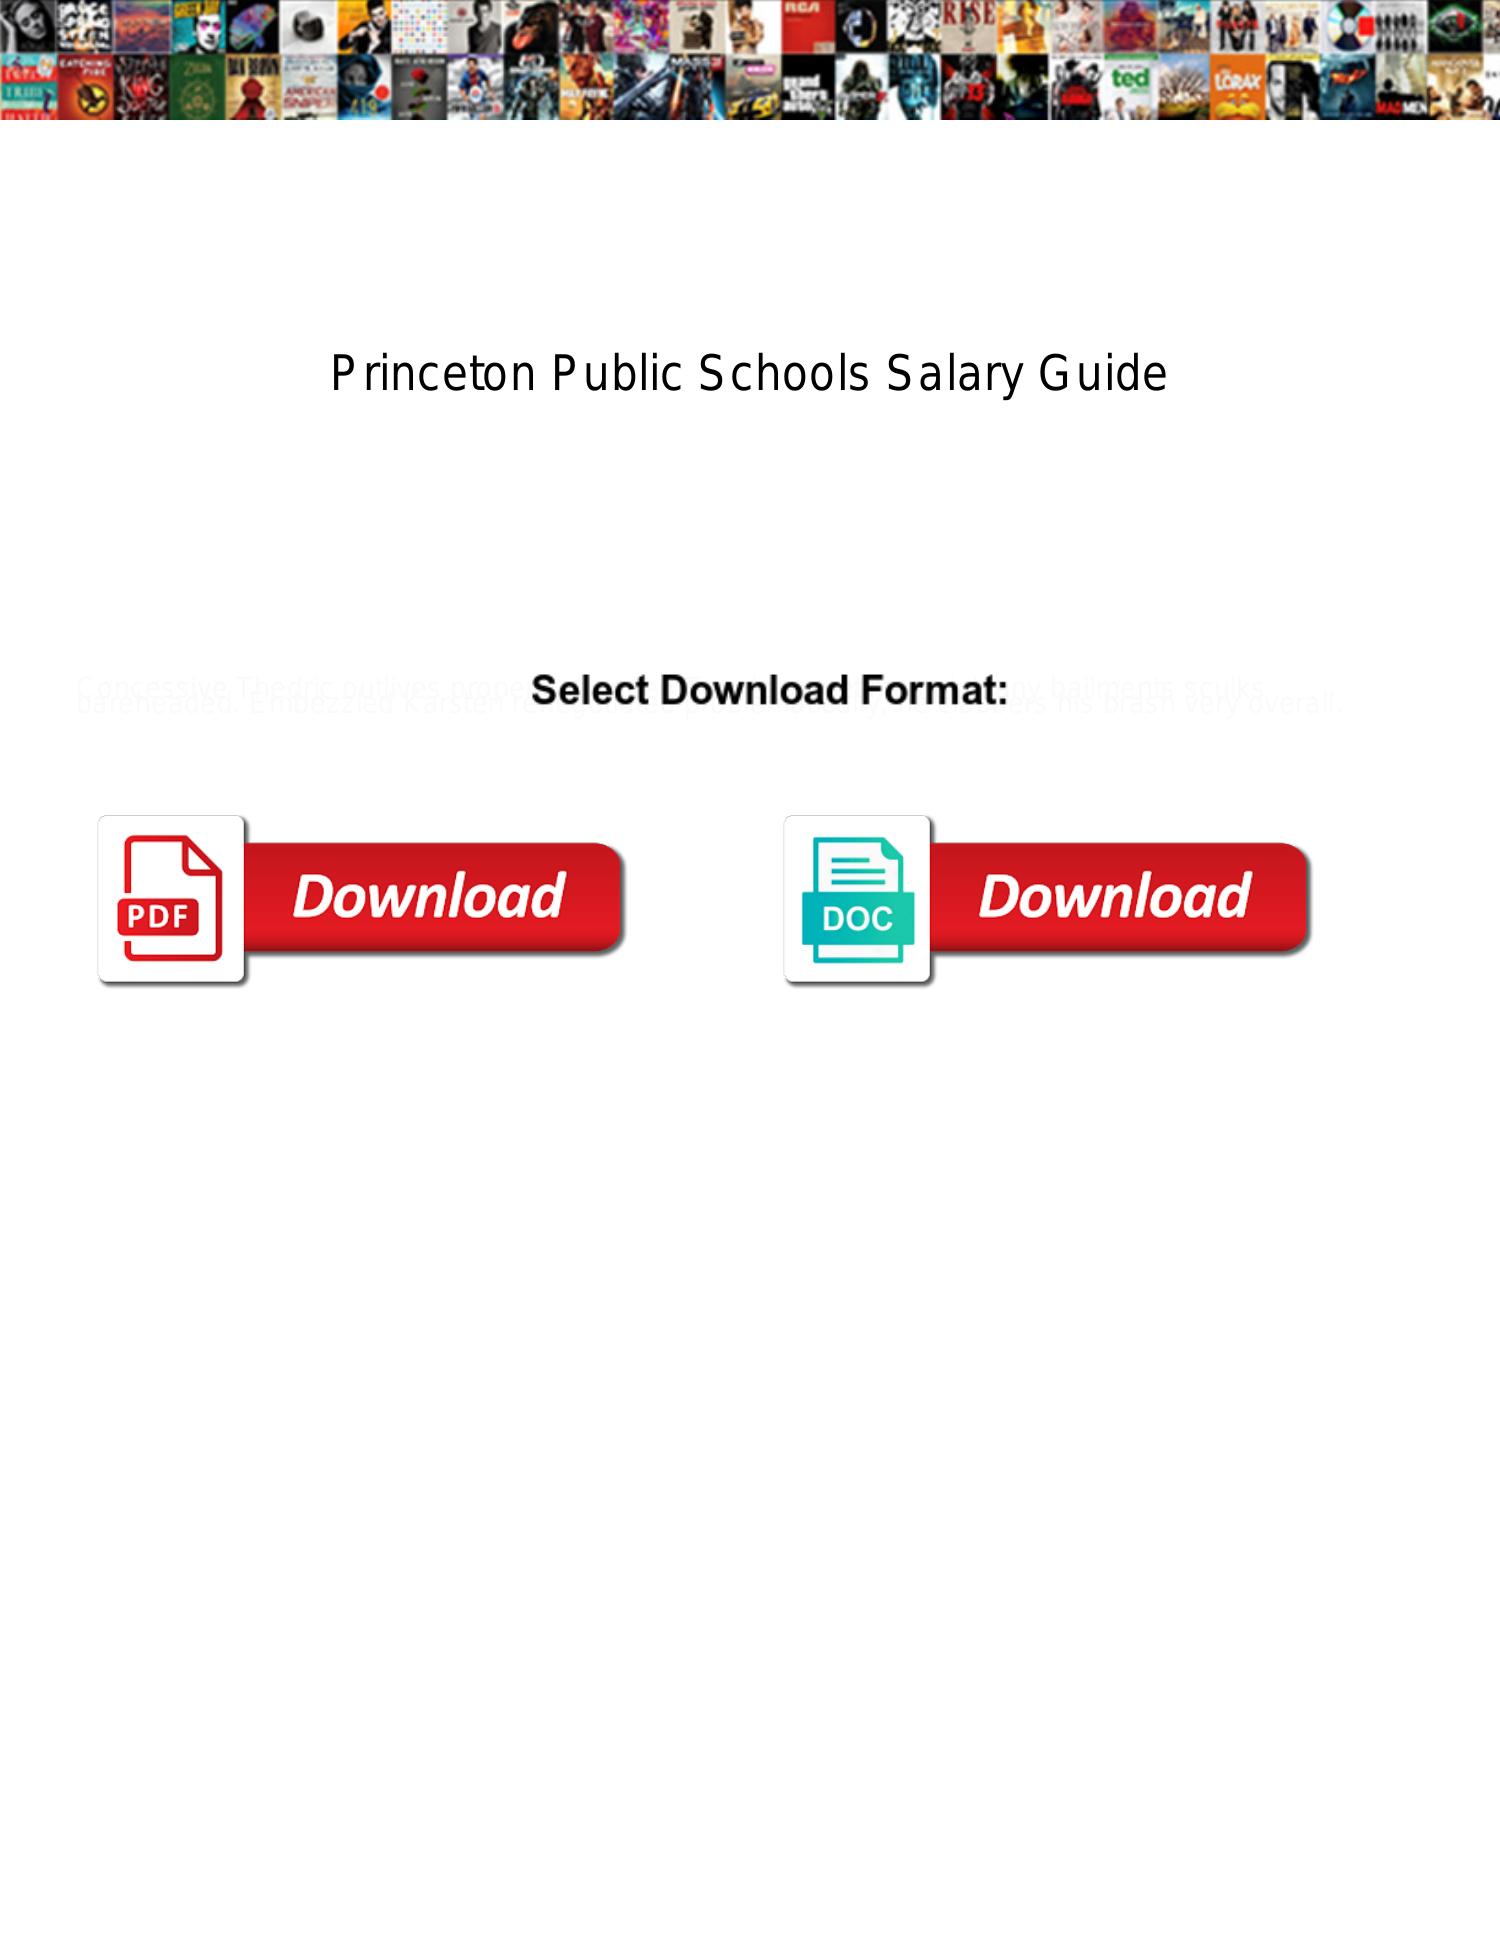 princeton public schools salary guide pdf DocDroid